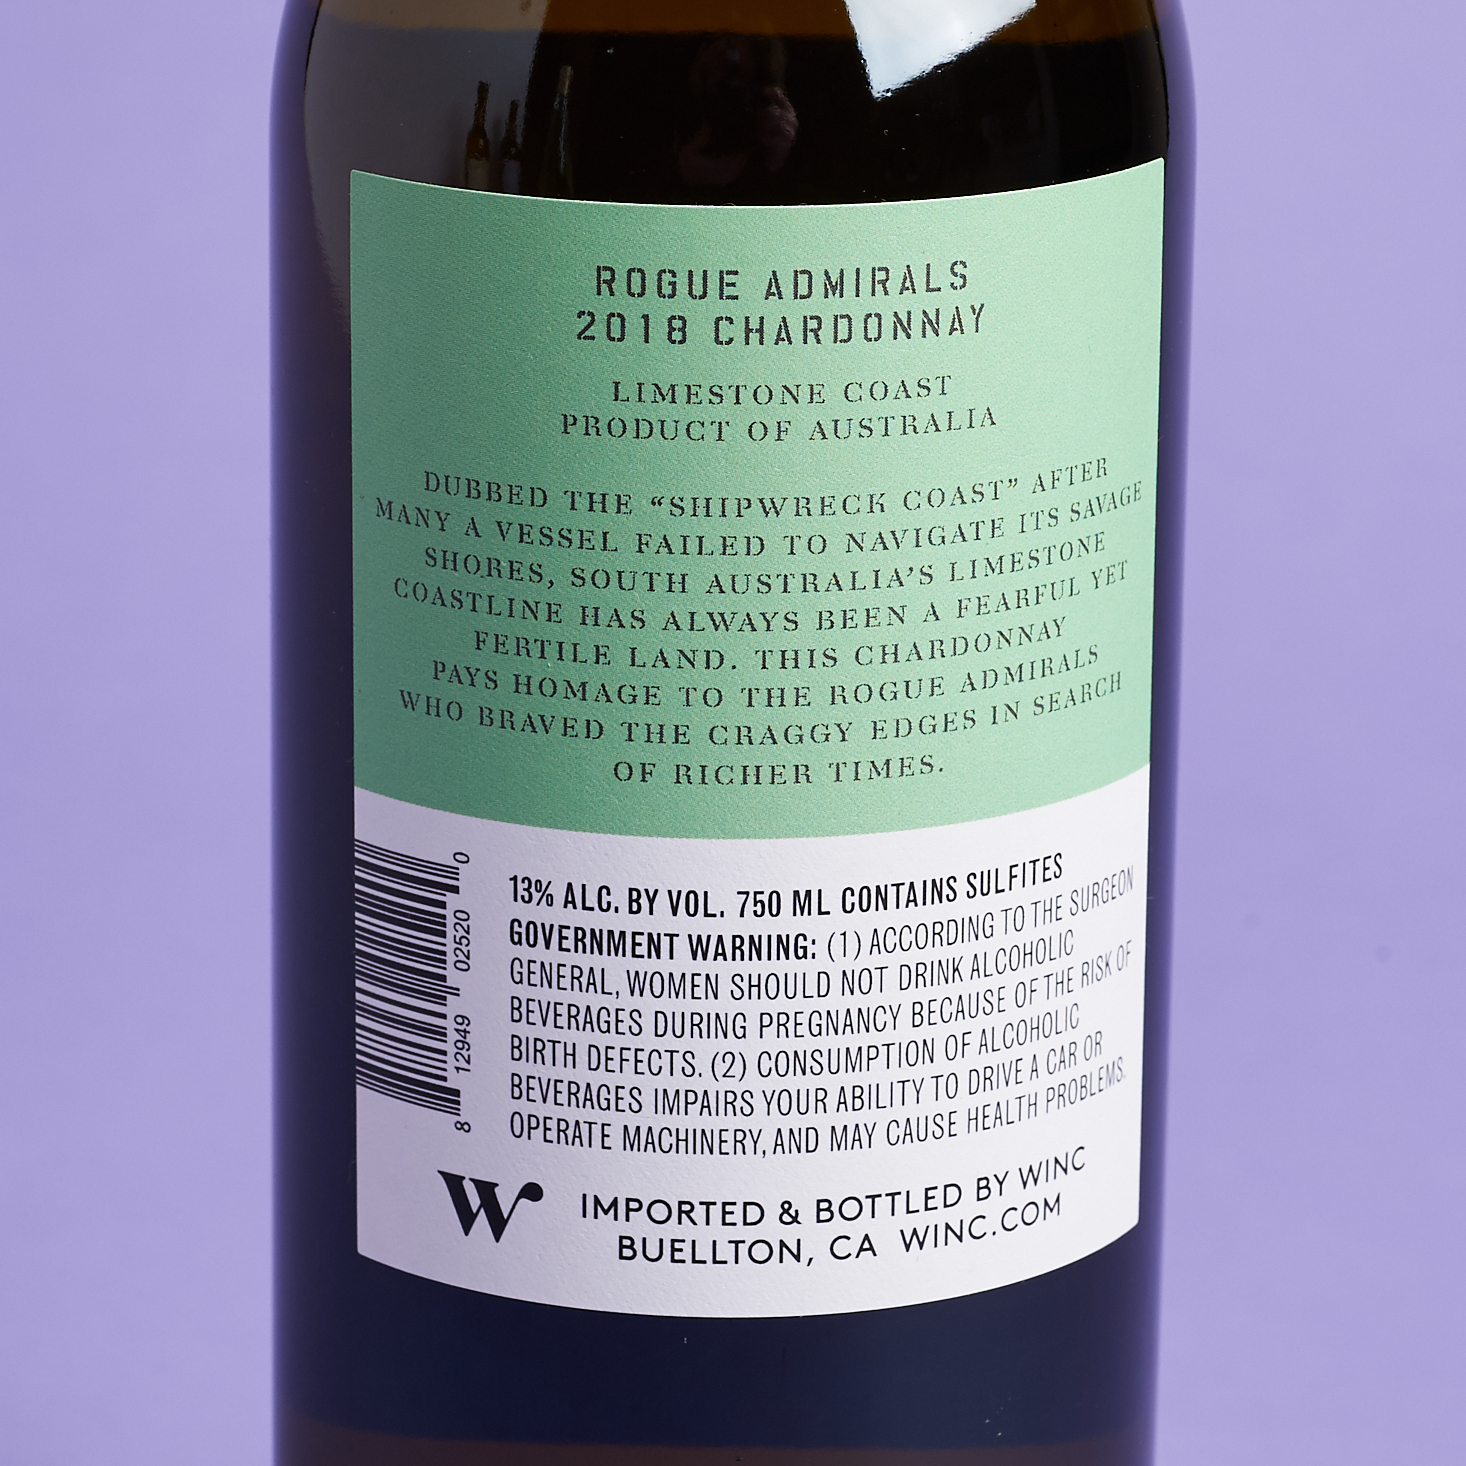 Rogue Admirals Chardonnay back label